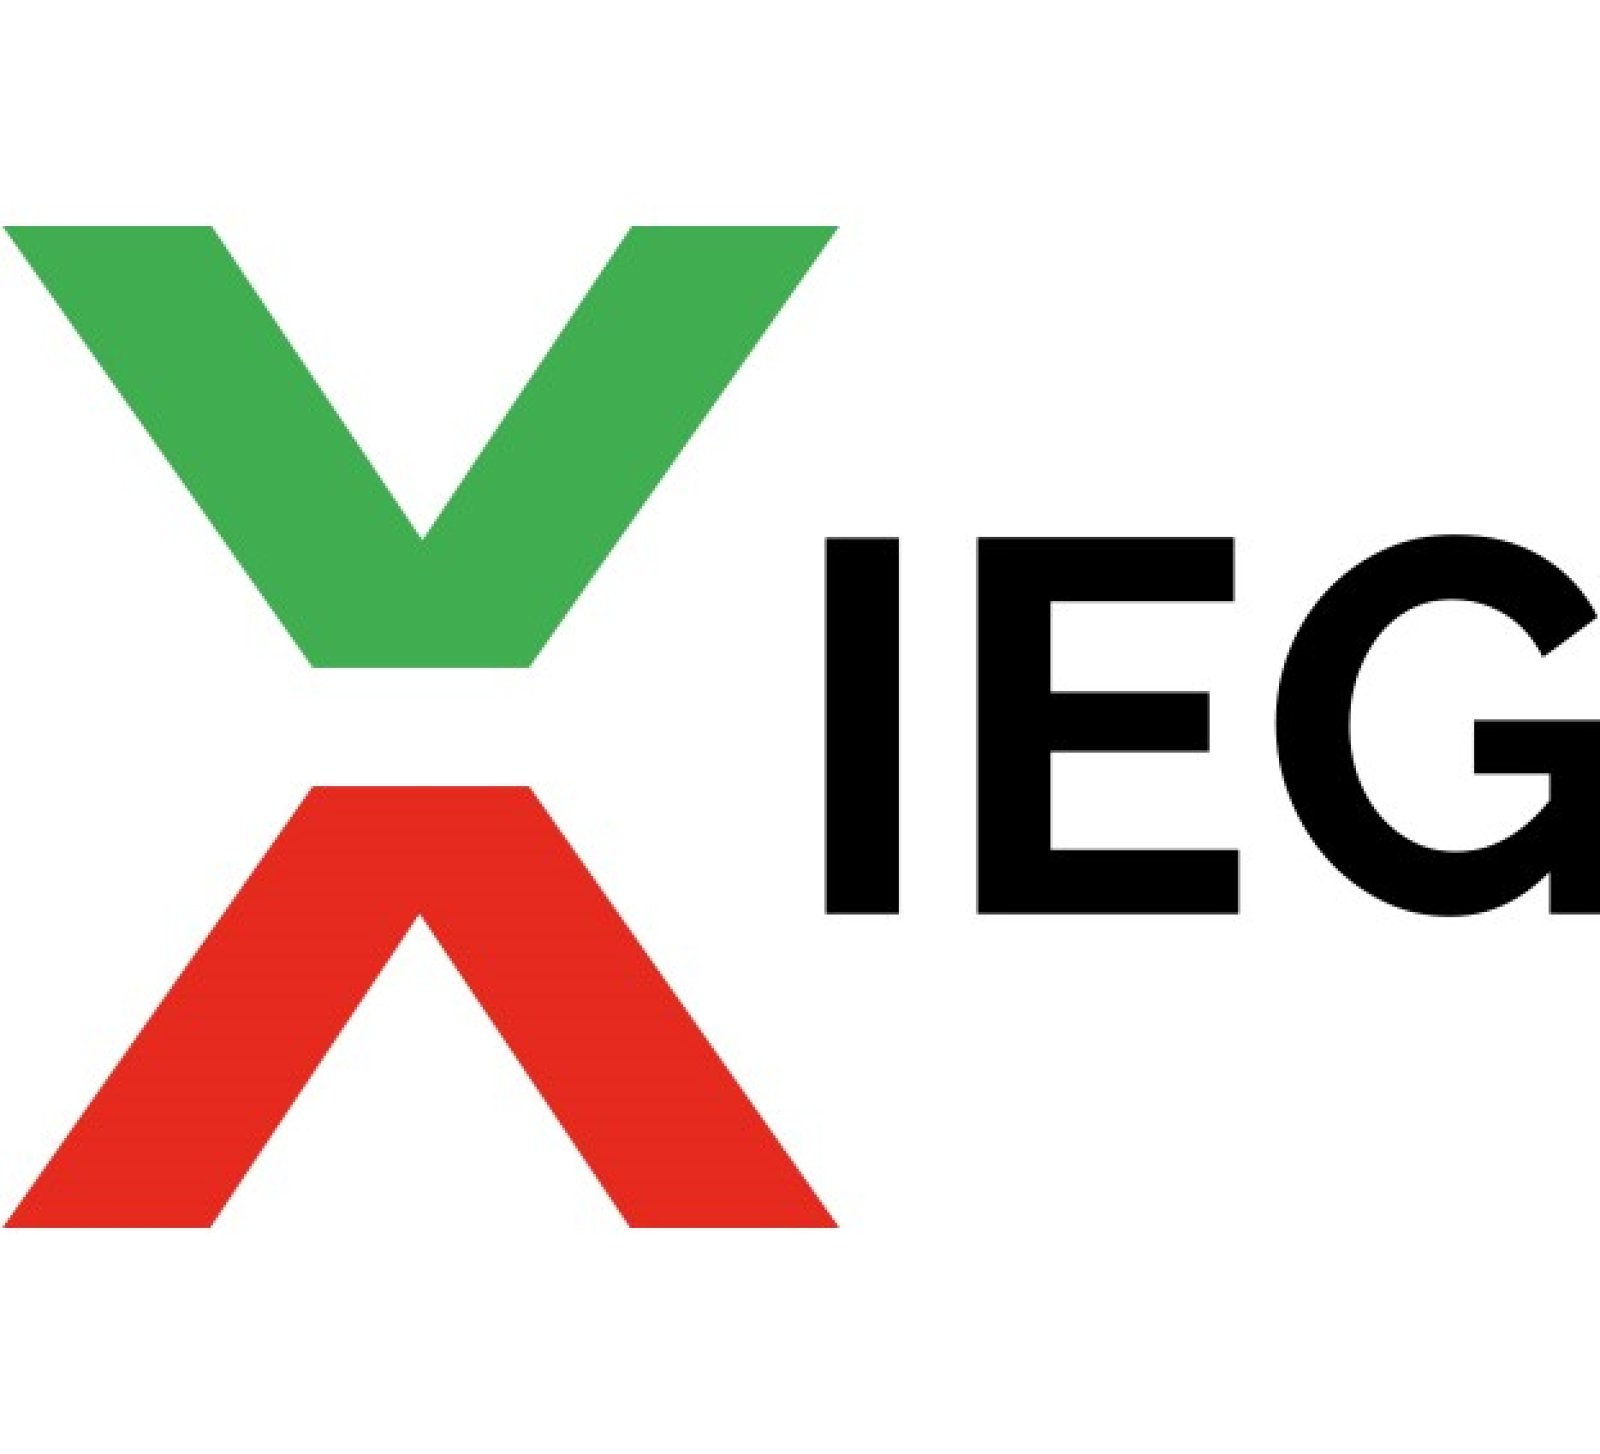 Logo ITALIAN EXHIBITION GROUP SPA